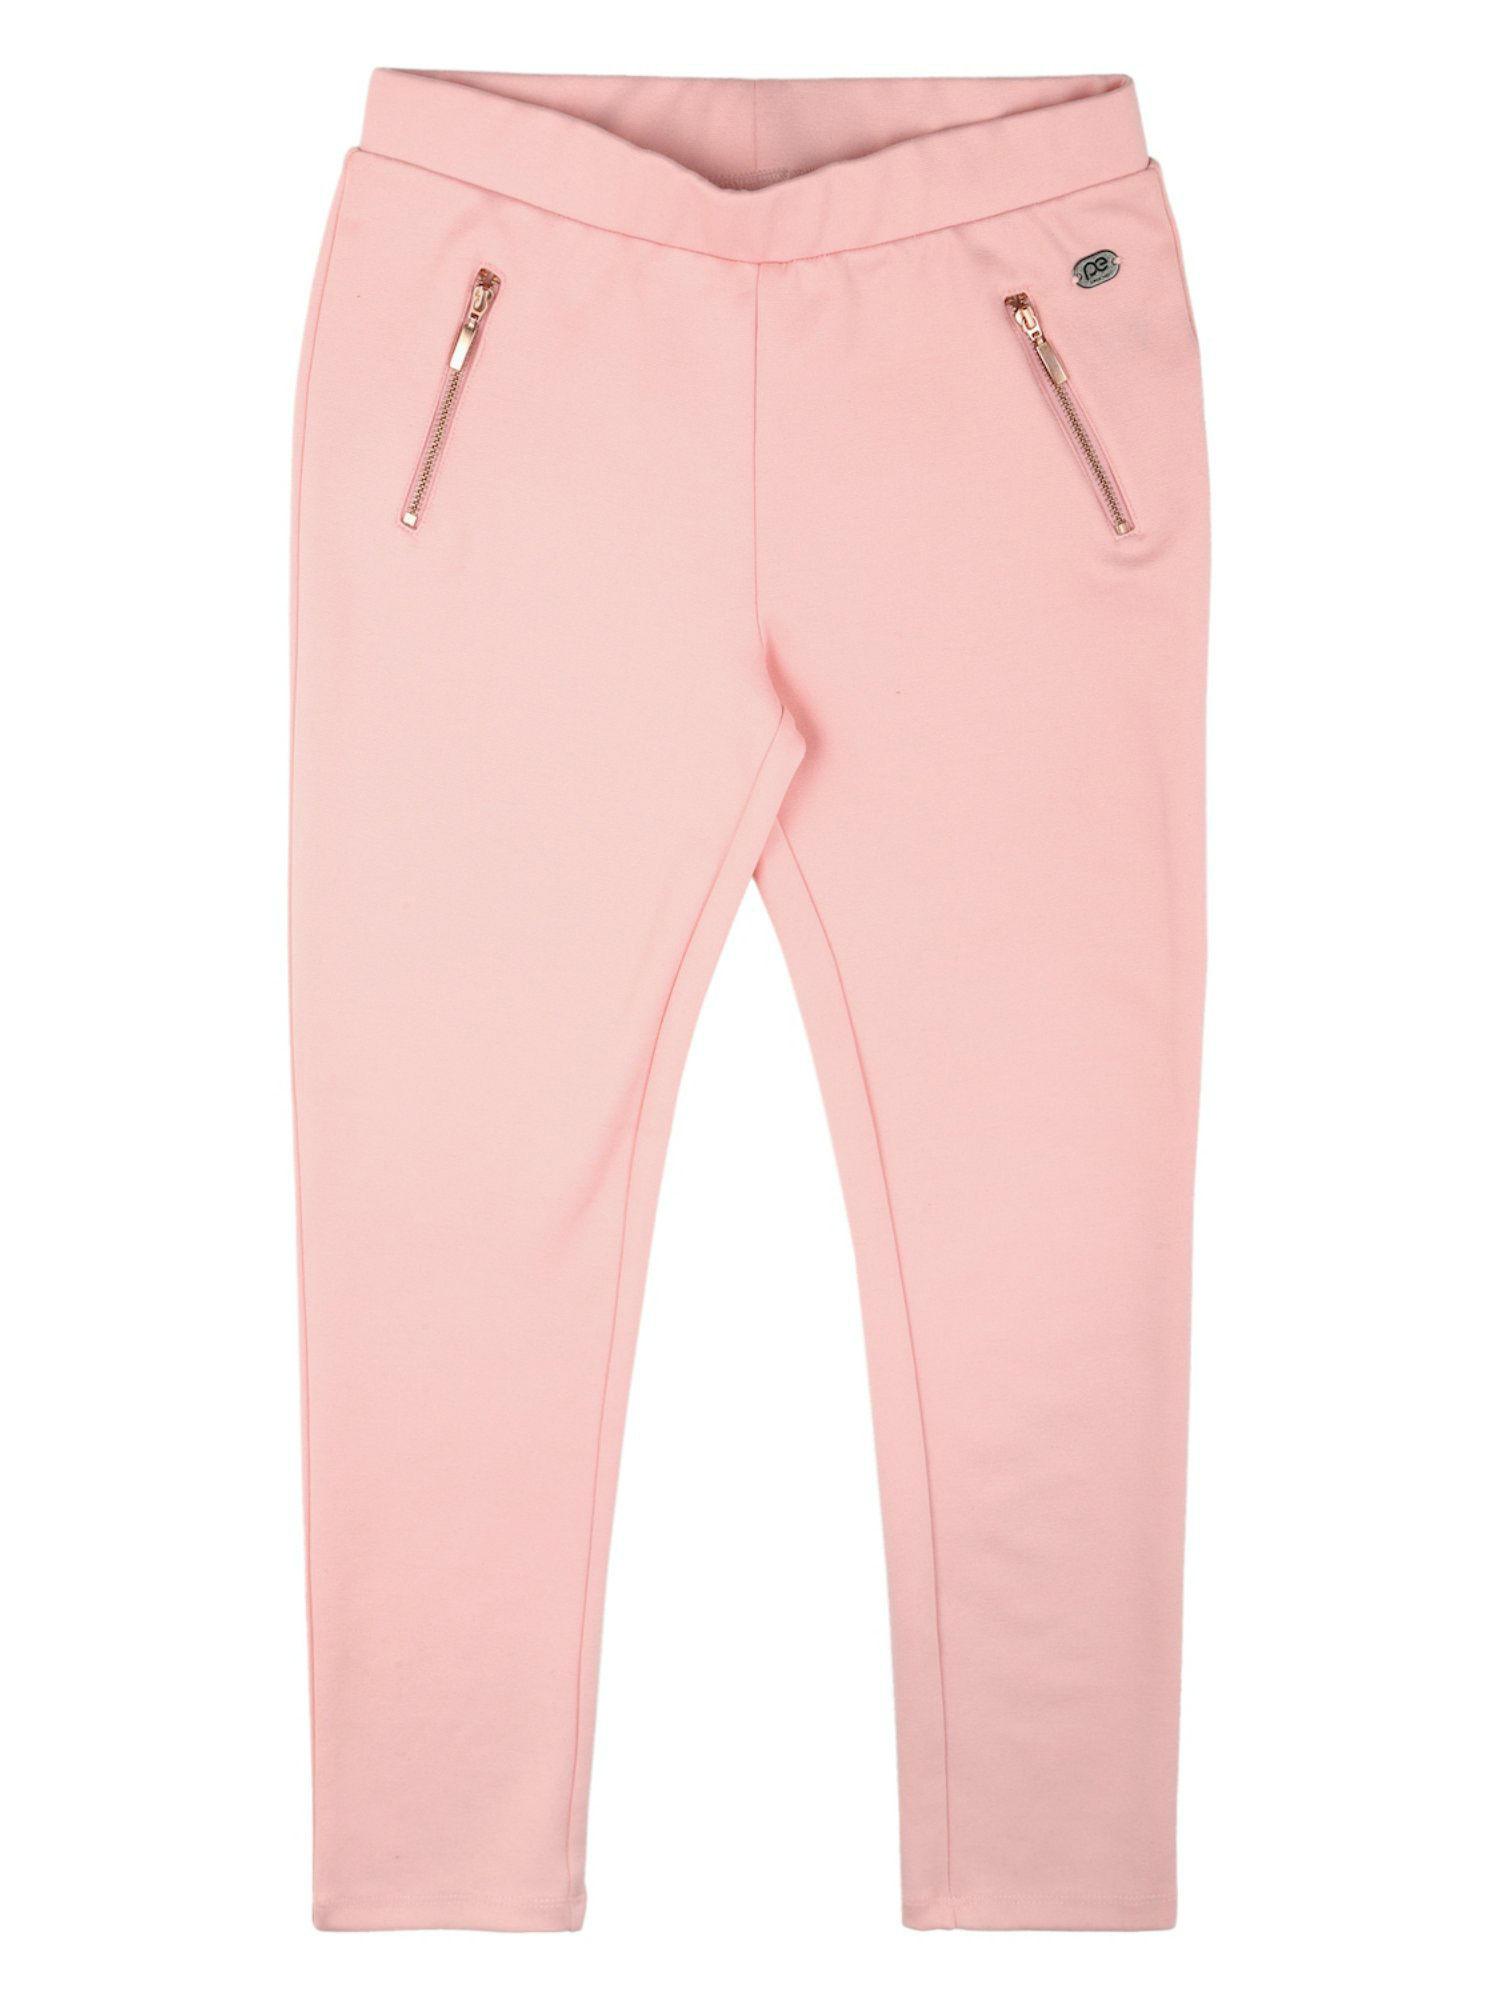 girls-pink-solid-leggings